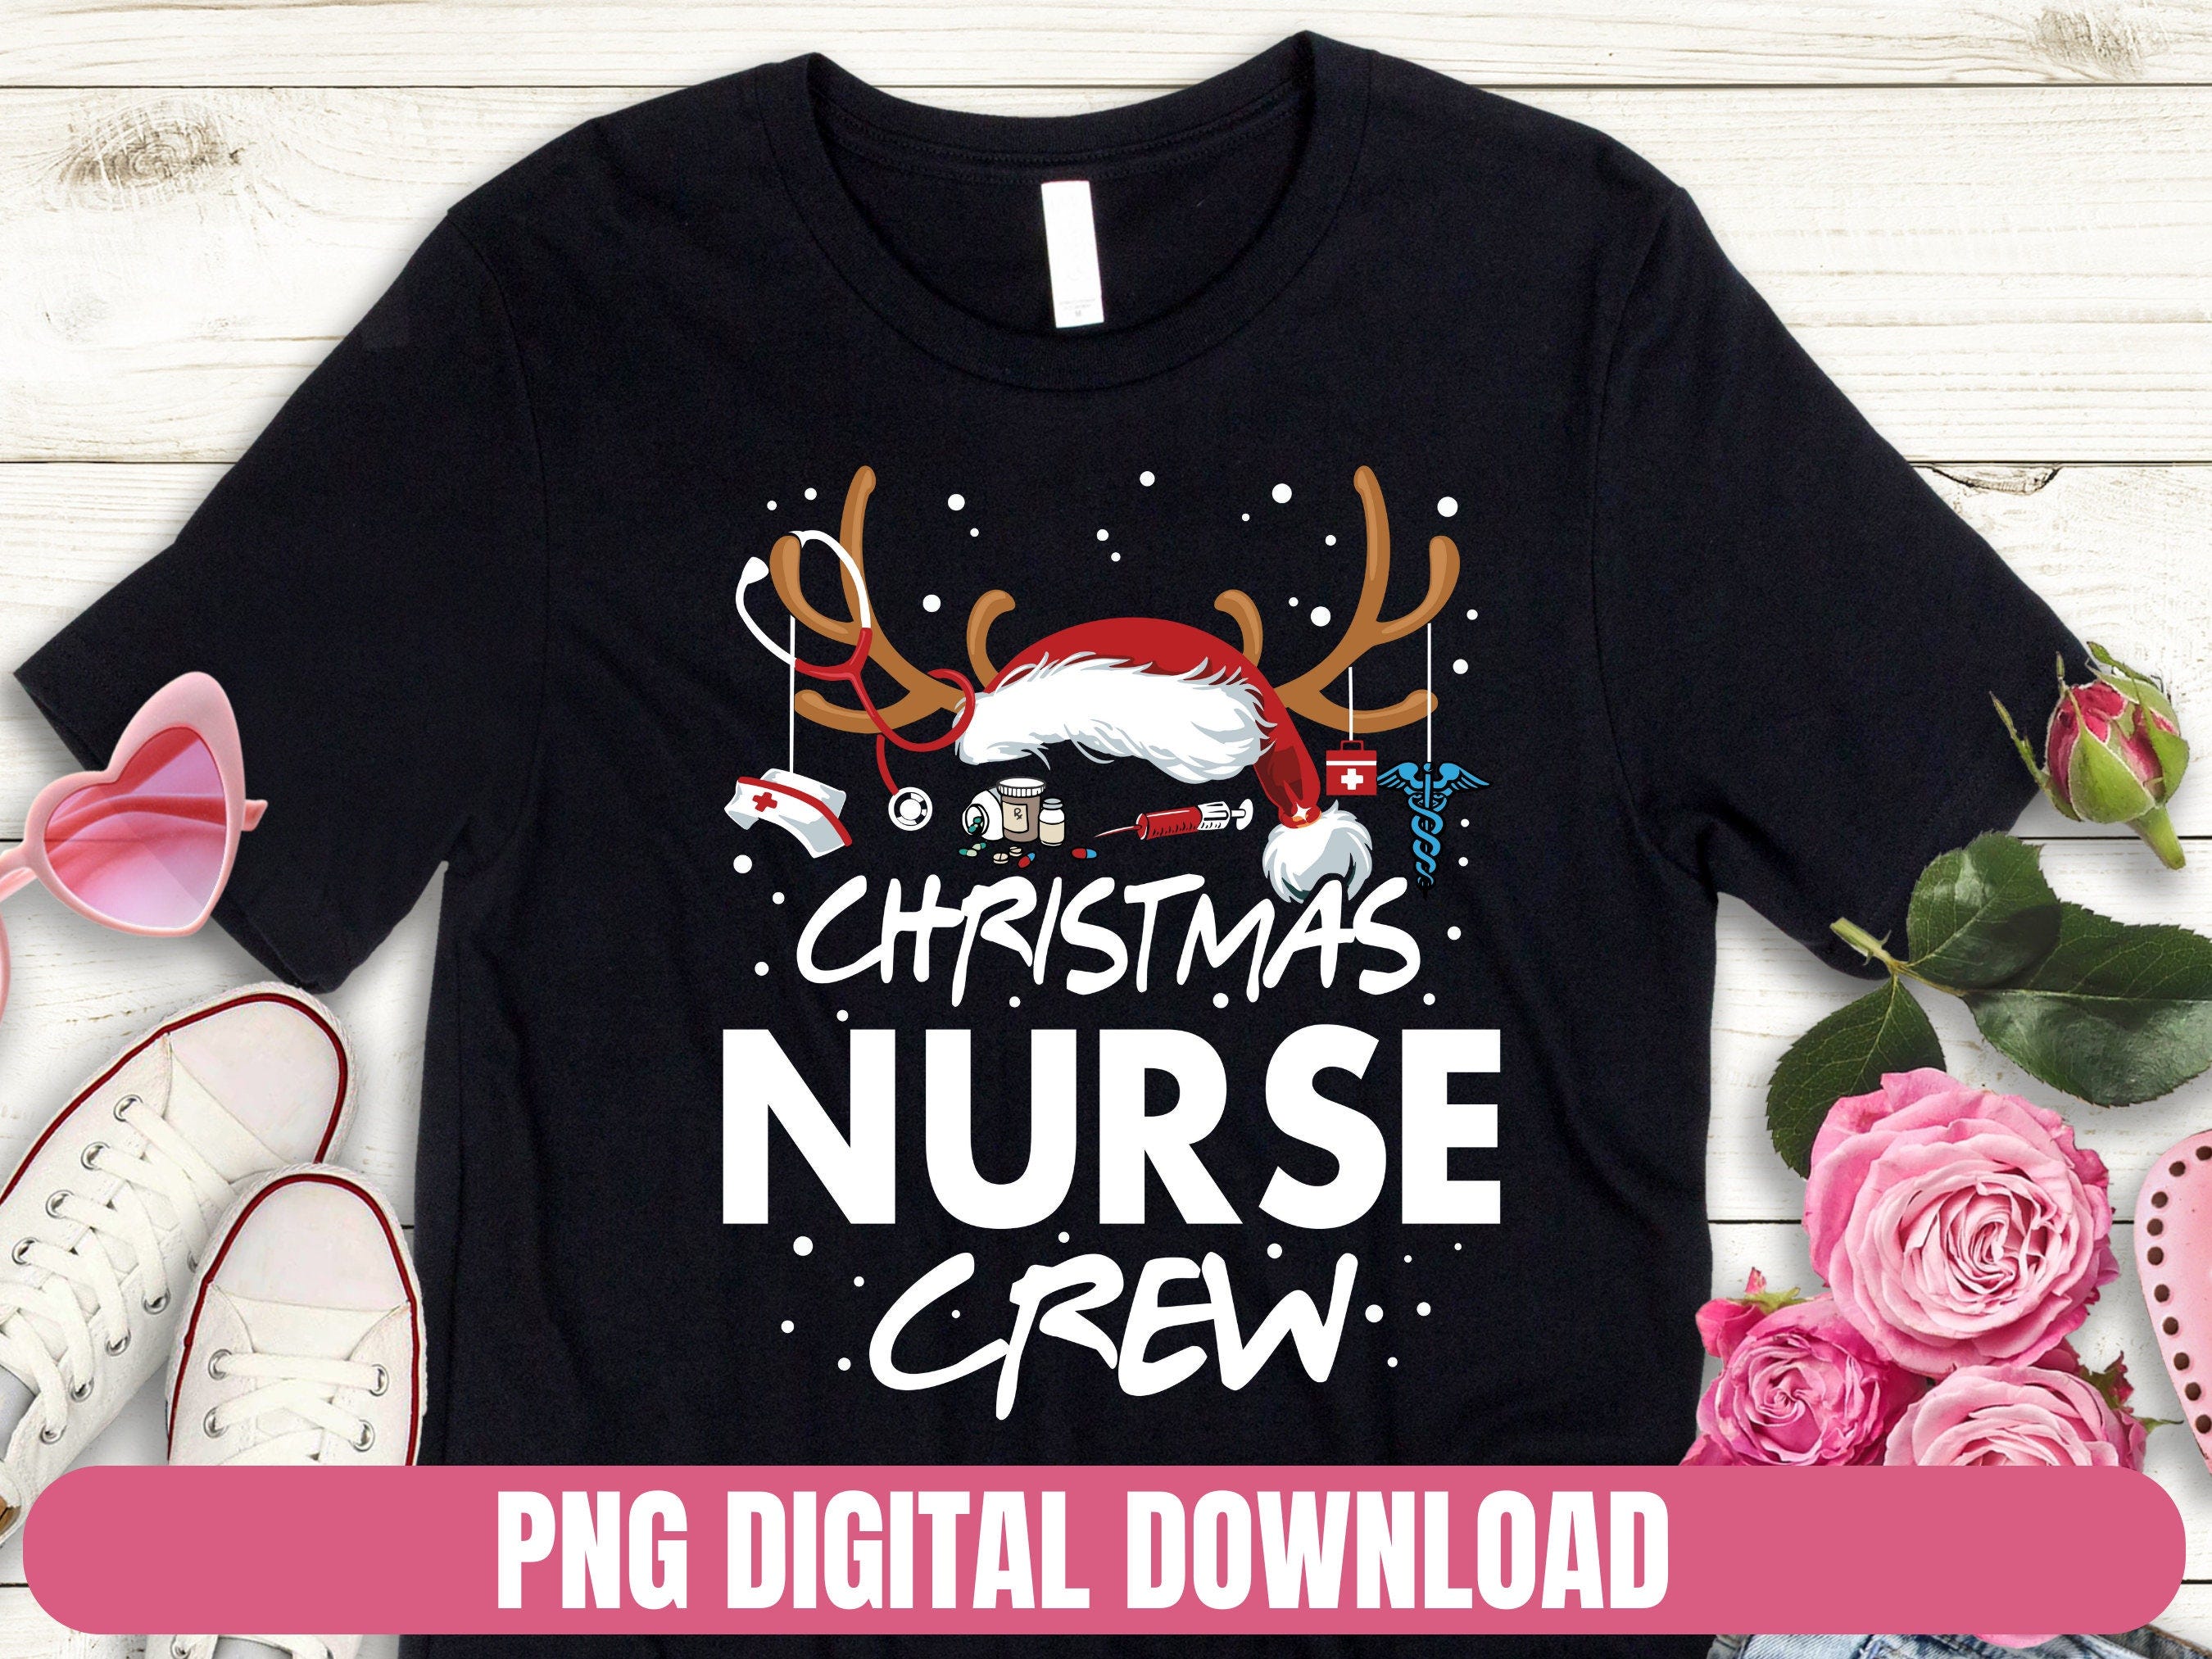 Christmas Nurse Team Crew  Printing Tshirt PNG Digital File Download